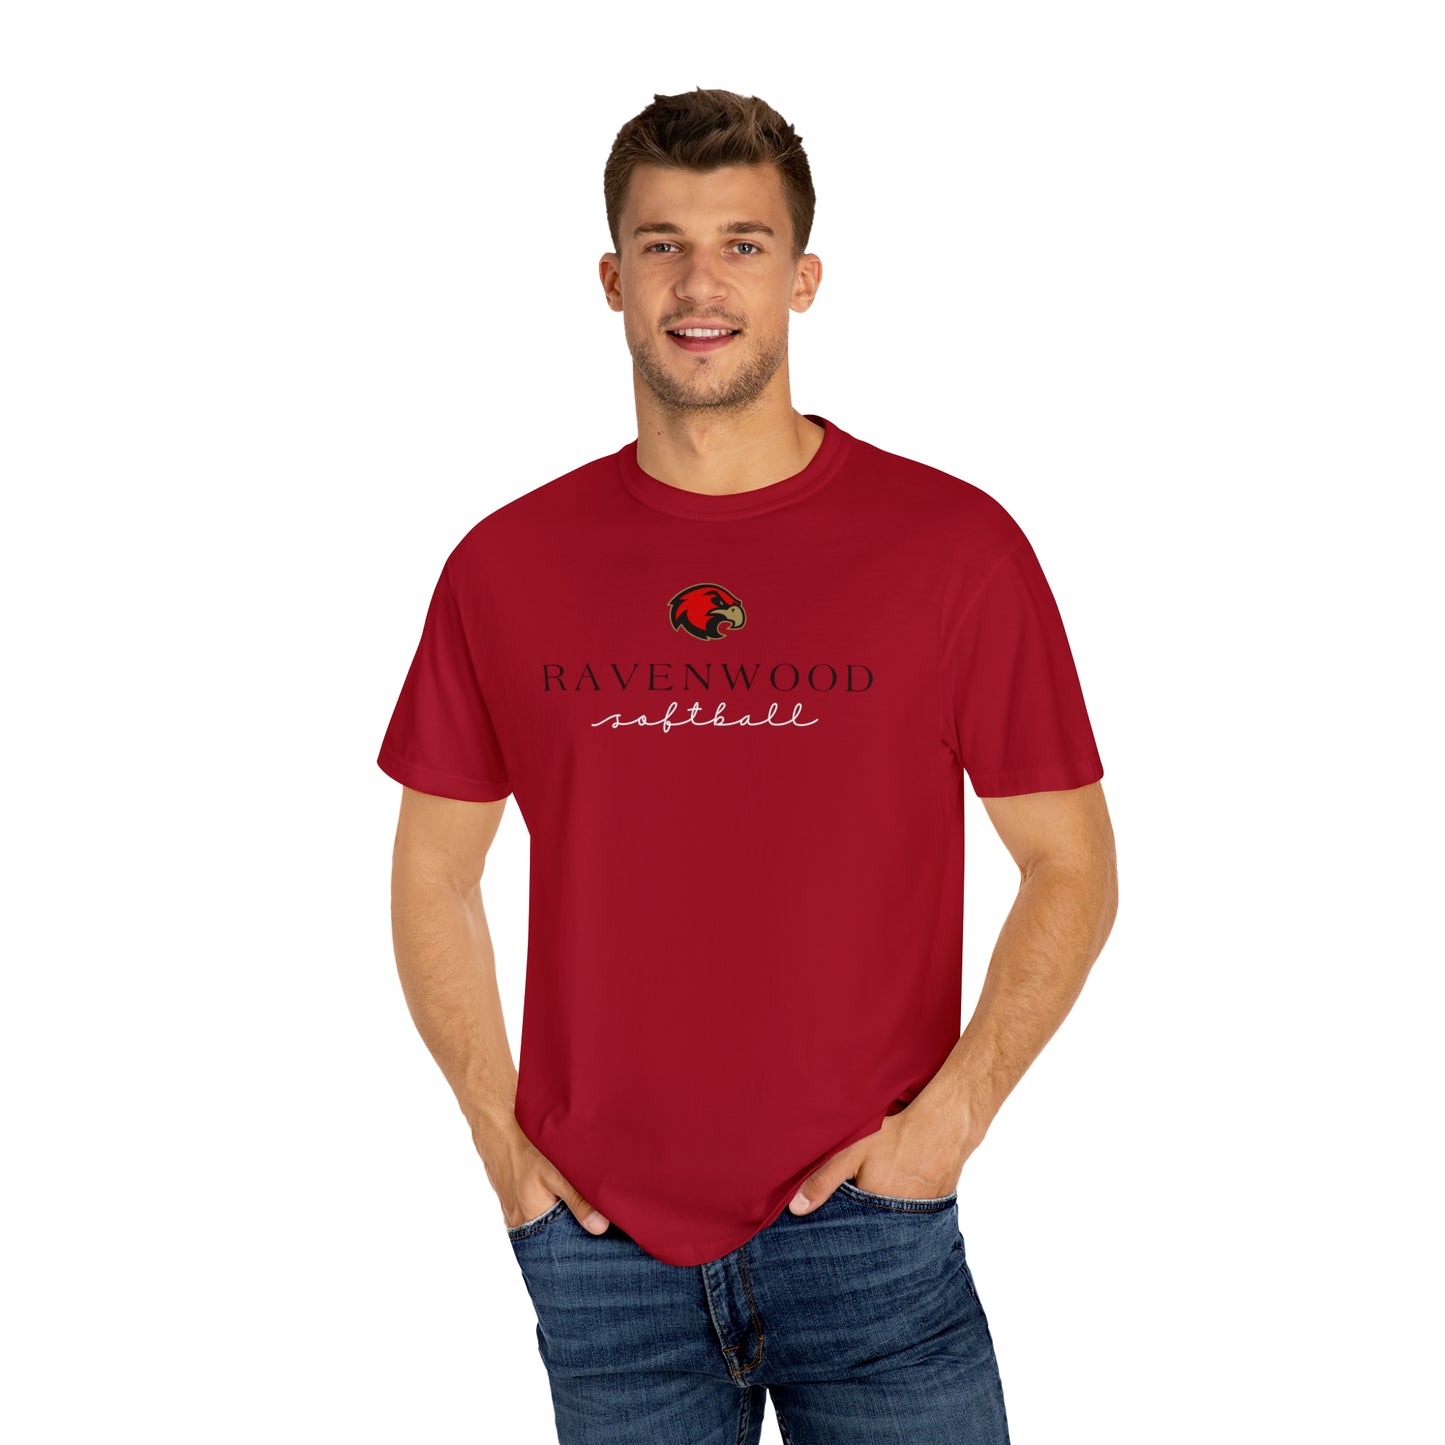 Ravenwood 1 Unisex Comfort Colors Shirt